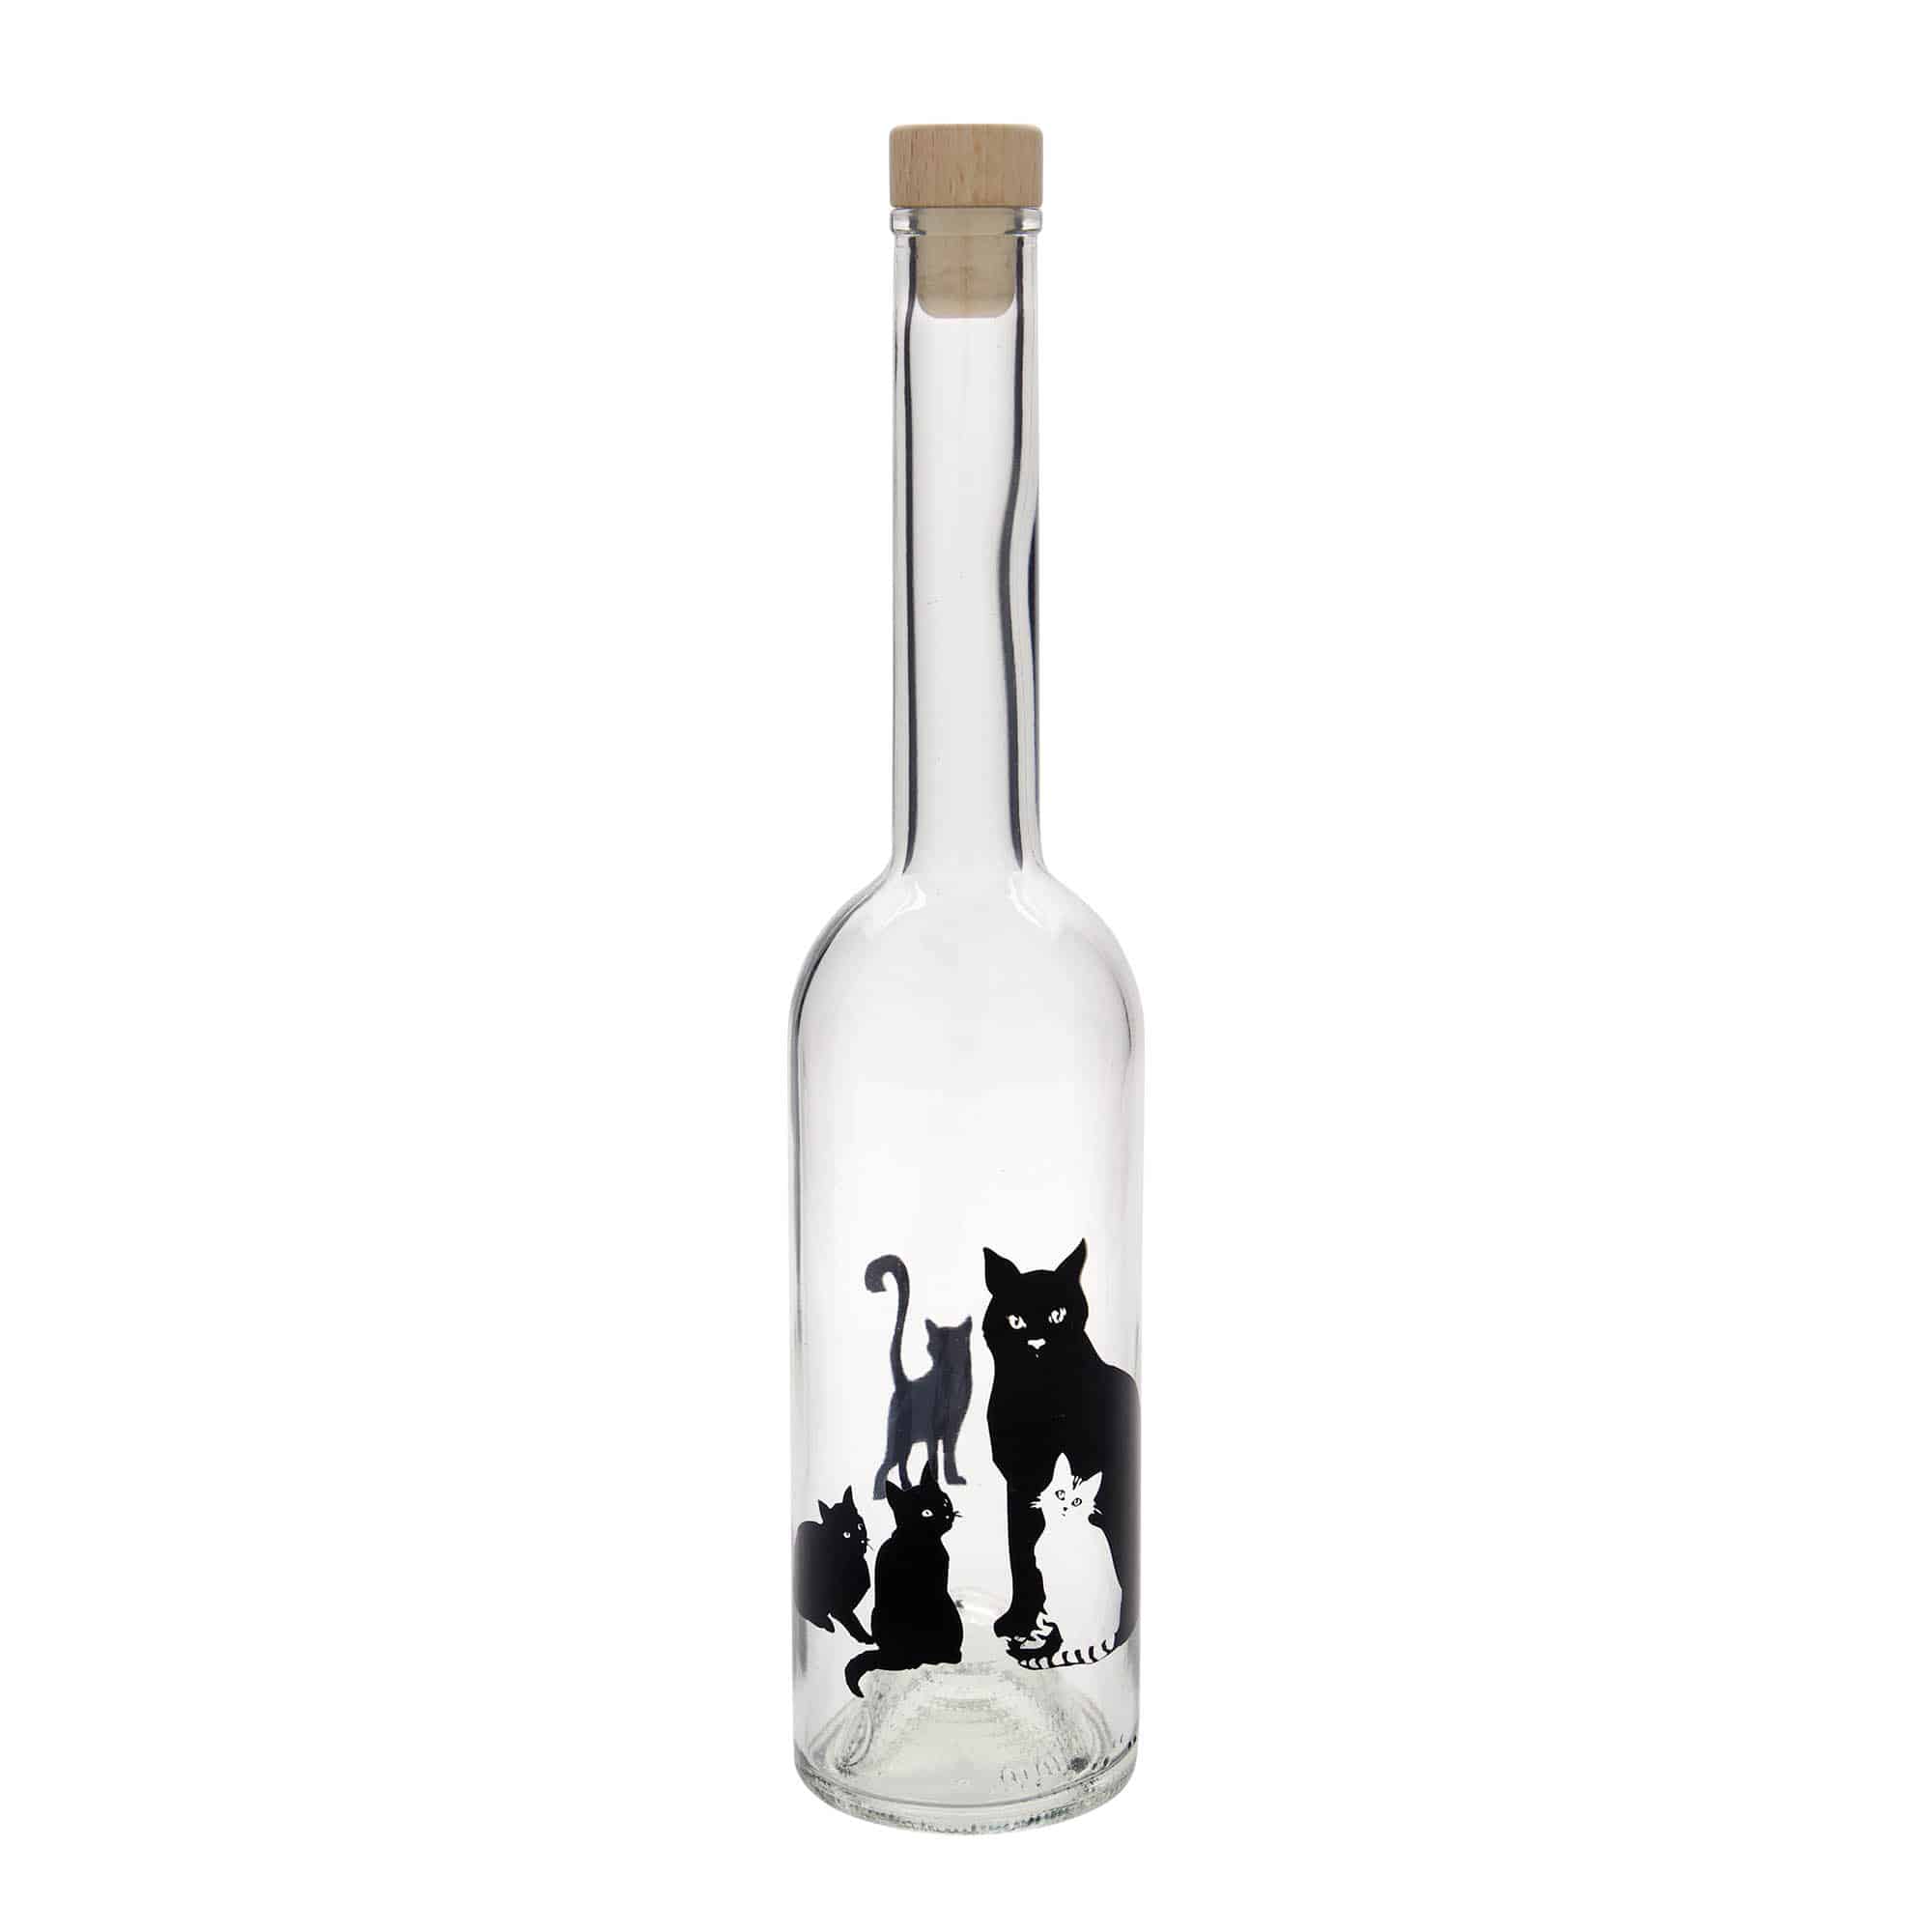 500 ml butelka szklana 'Opera', wzór: koty, zamknięcie: korek